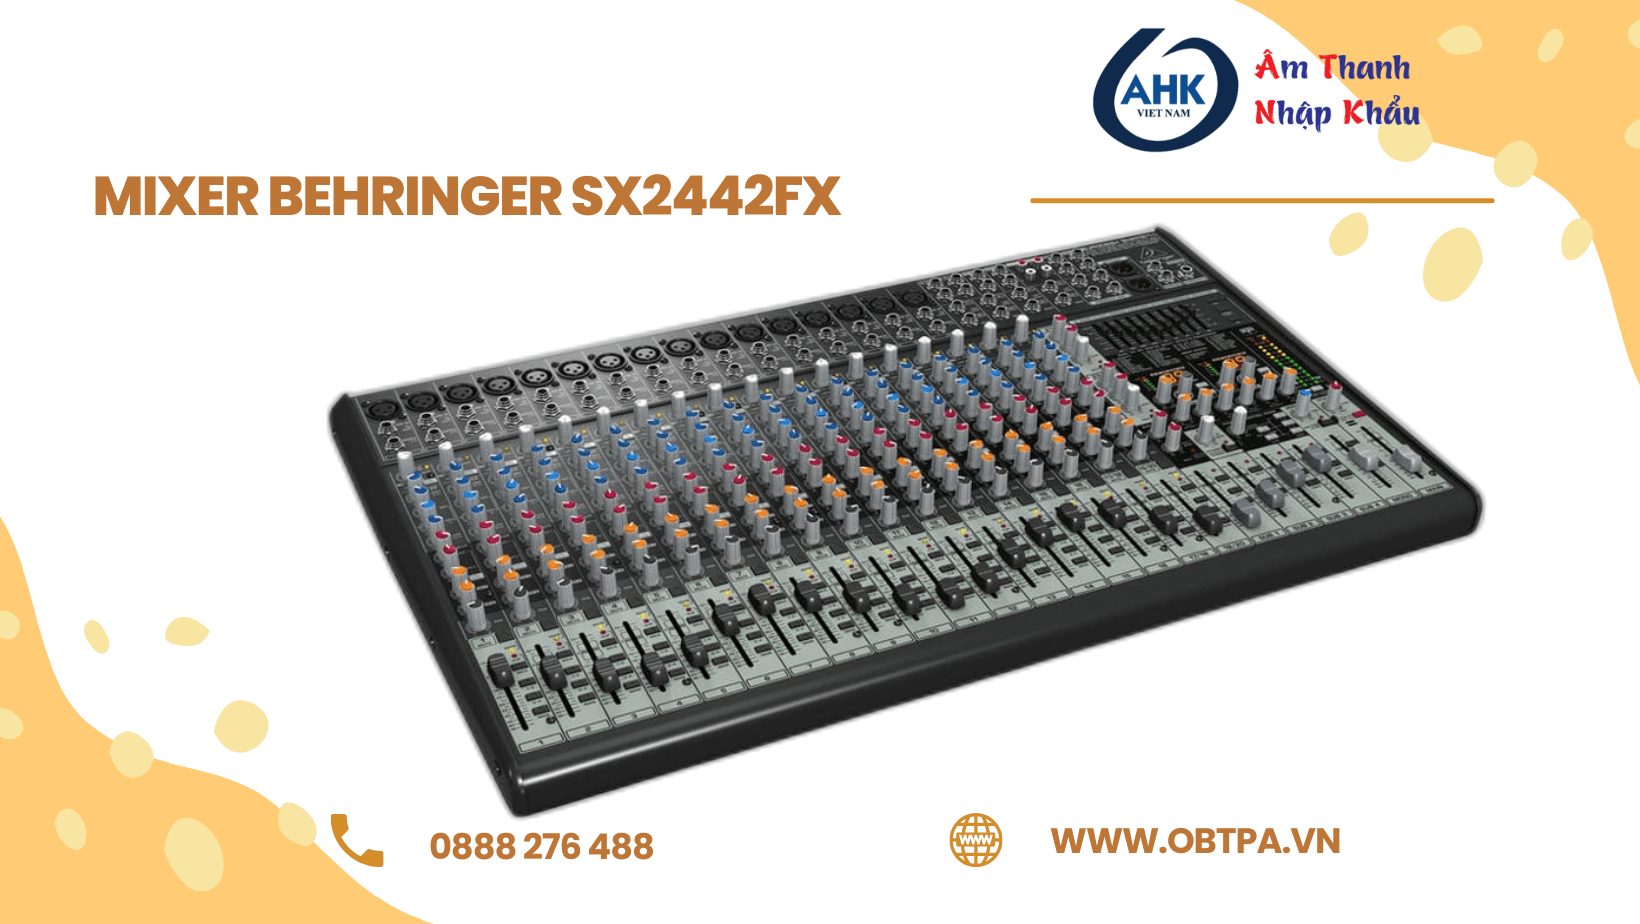 Mixer Behringer SX2442FX 24 input 4 Bus tích hợp Mic Preamp EQ USB 2 x FX